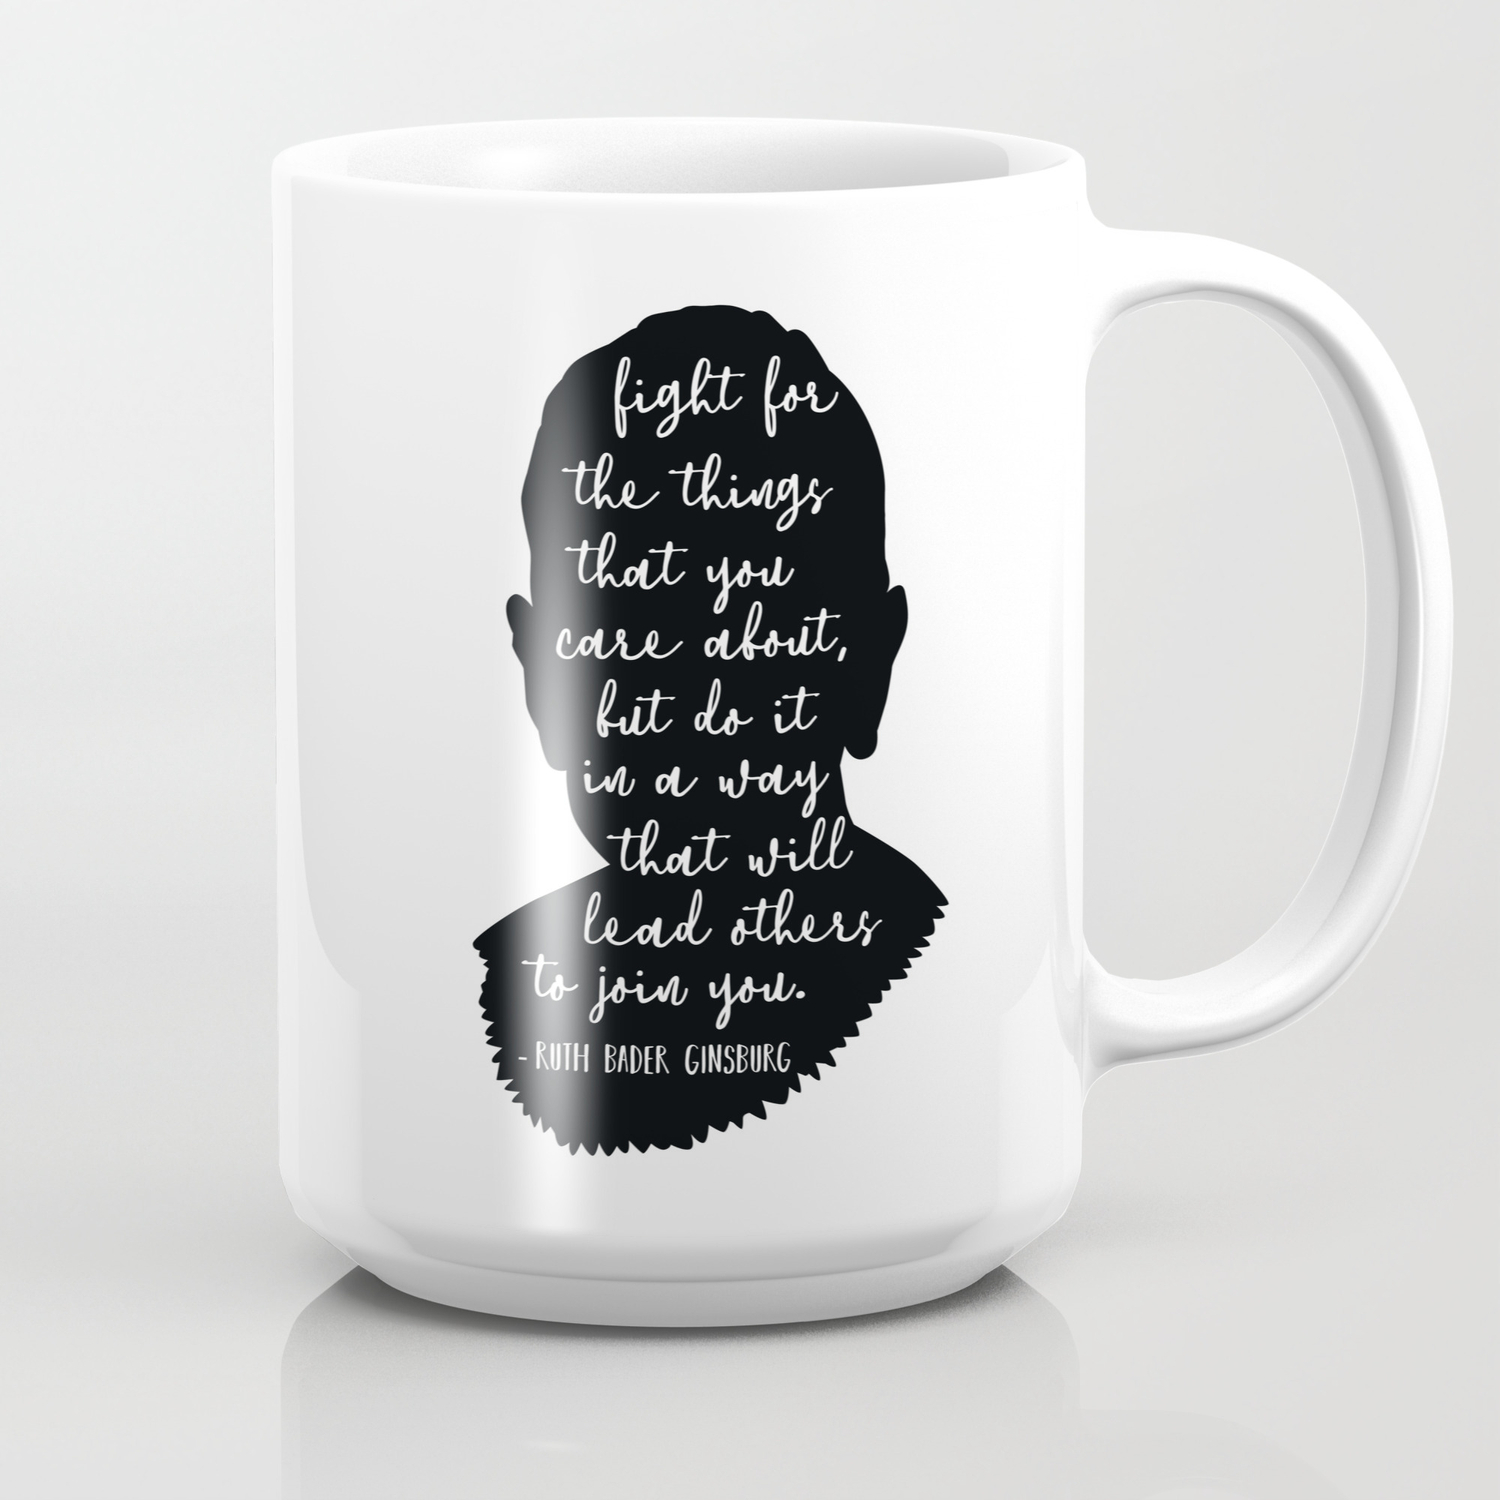 Best 11 Ounce Ceramic Coffee Mug Gift Notorious Rbg Ruth Bader Ginsburg Women Rights Mug Coffee Mugs For 